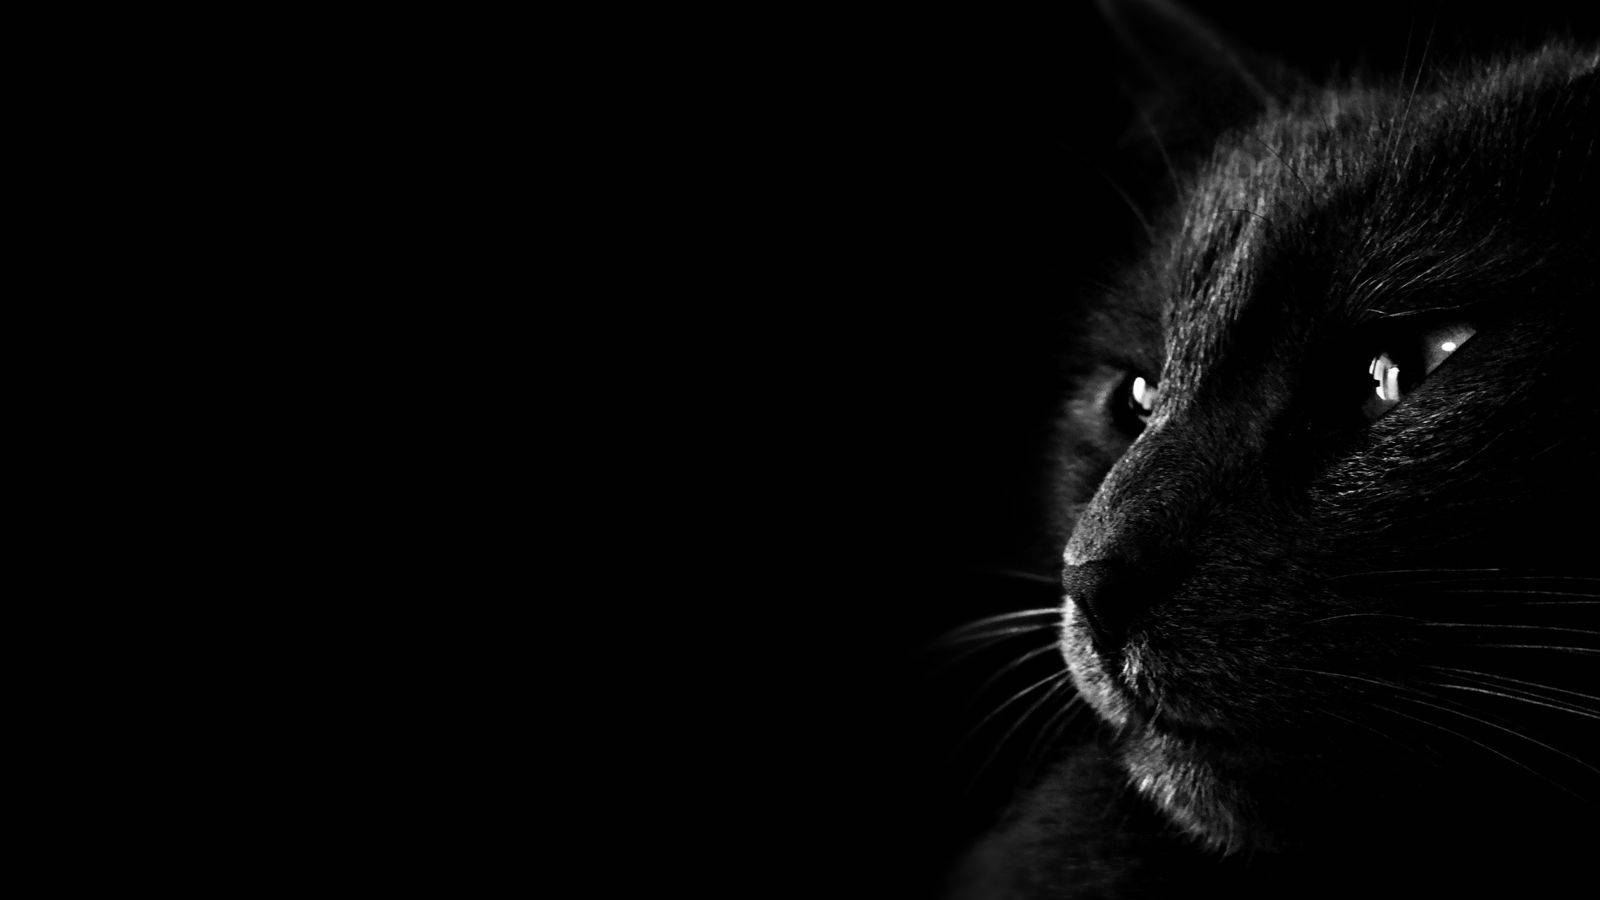 Aesthetic Cat In Black